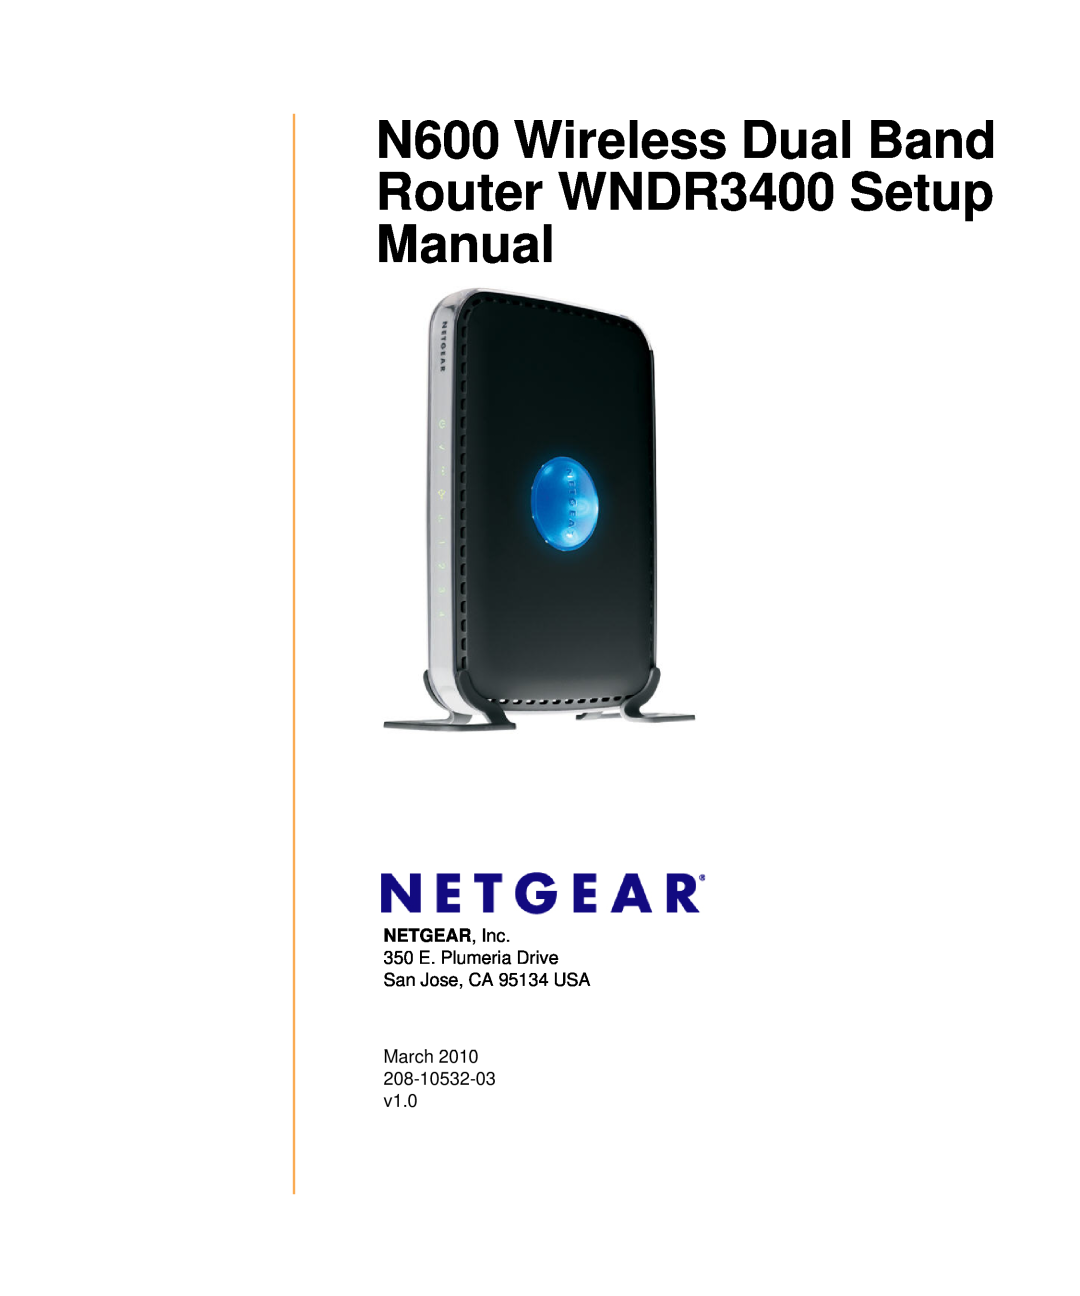 NETGEAR WNDR3400-100NAS manual N600 Wireless Dual Band Router WNDR3400 Setup Manual, NETGEAR, Inc 